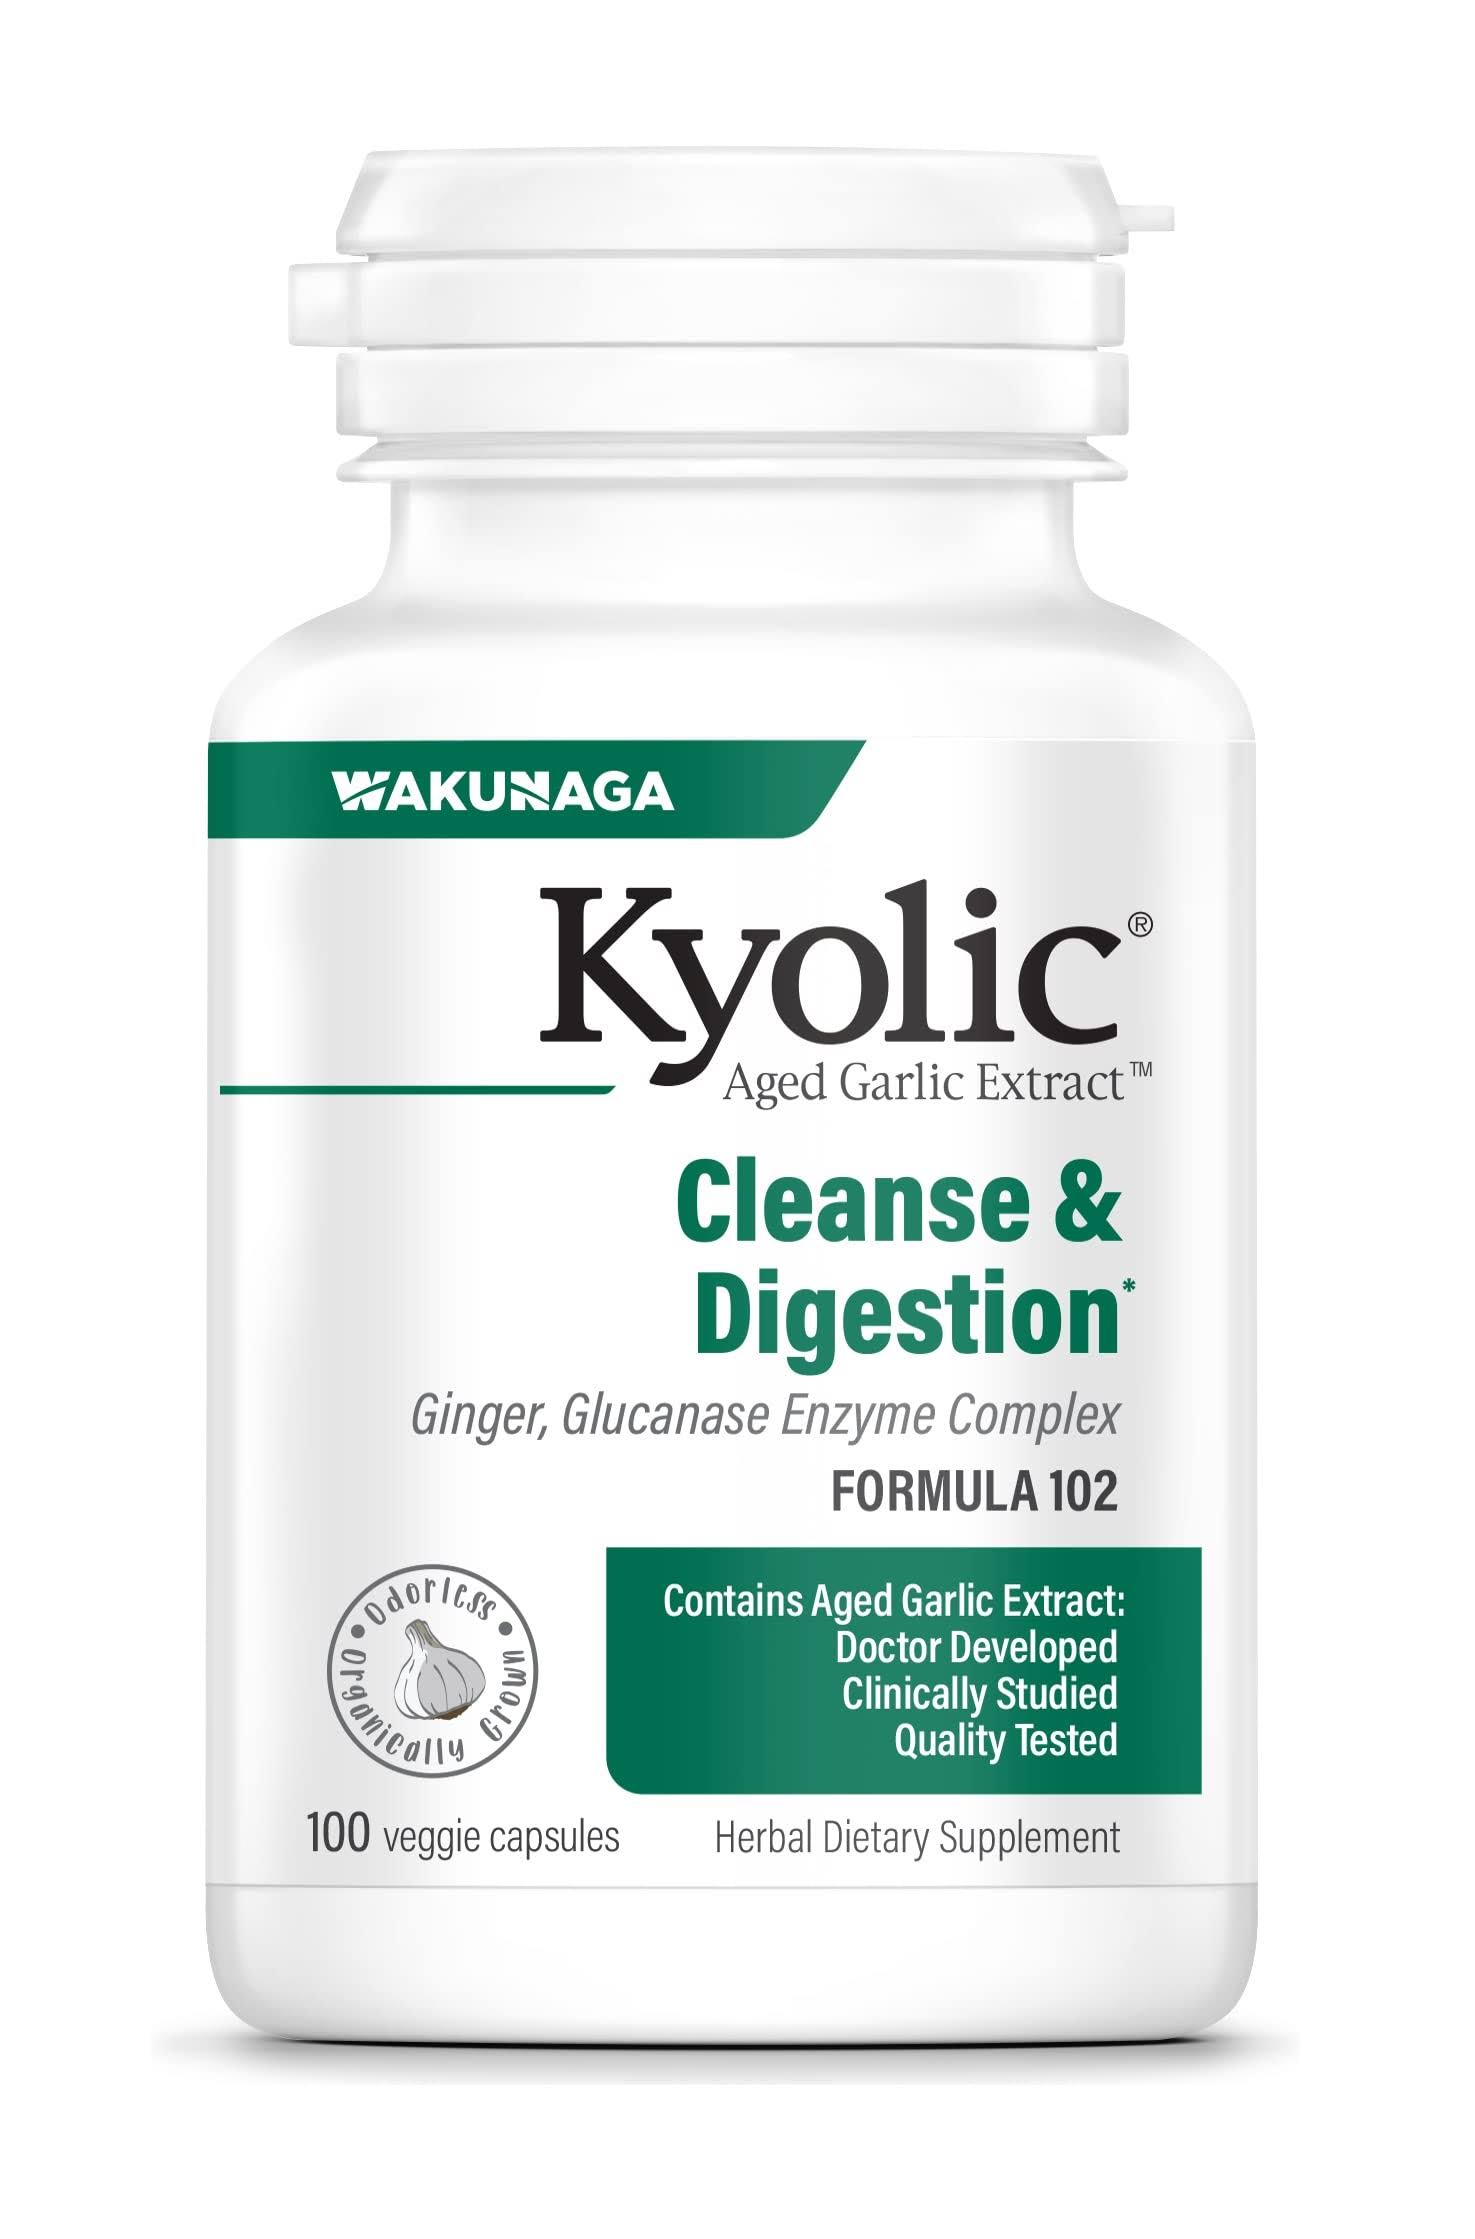 Kyolic Candida Cleanse & Digestion Capsules - Aged Garlic, x100